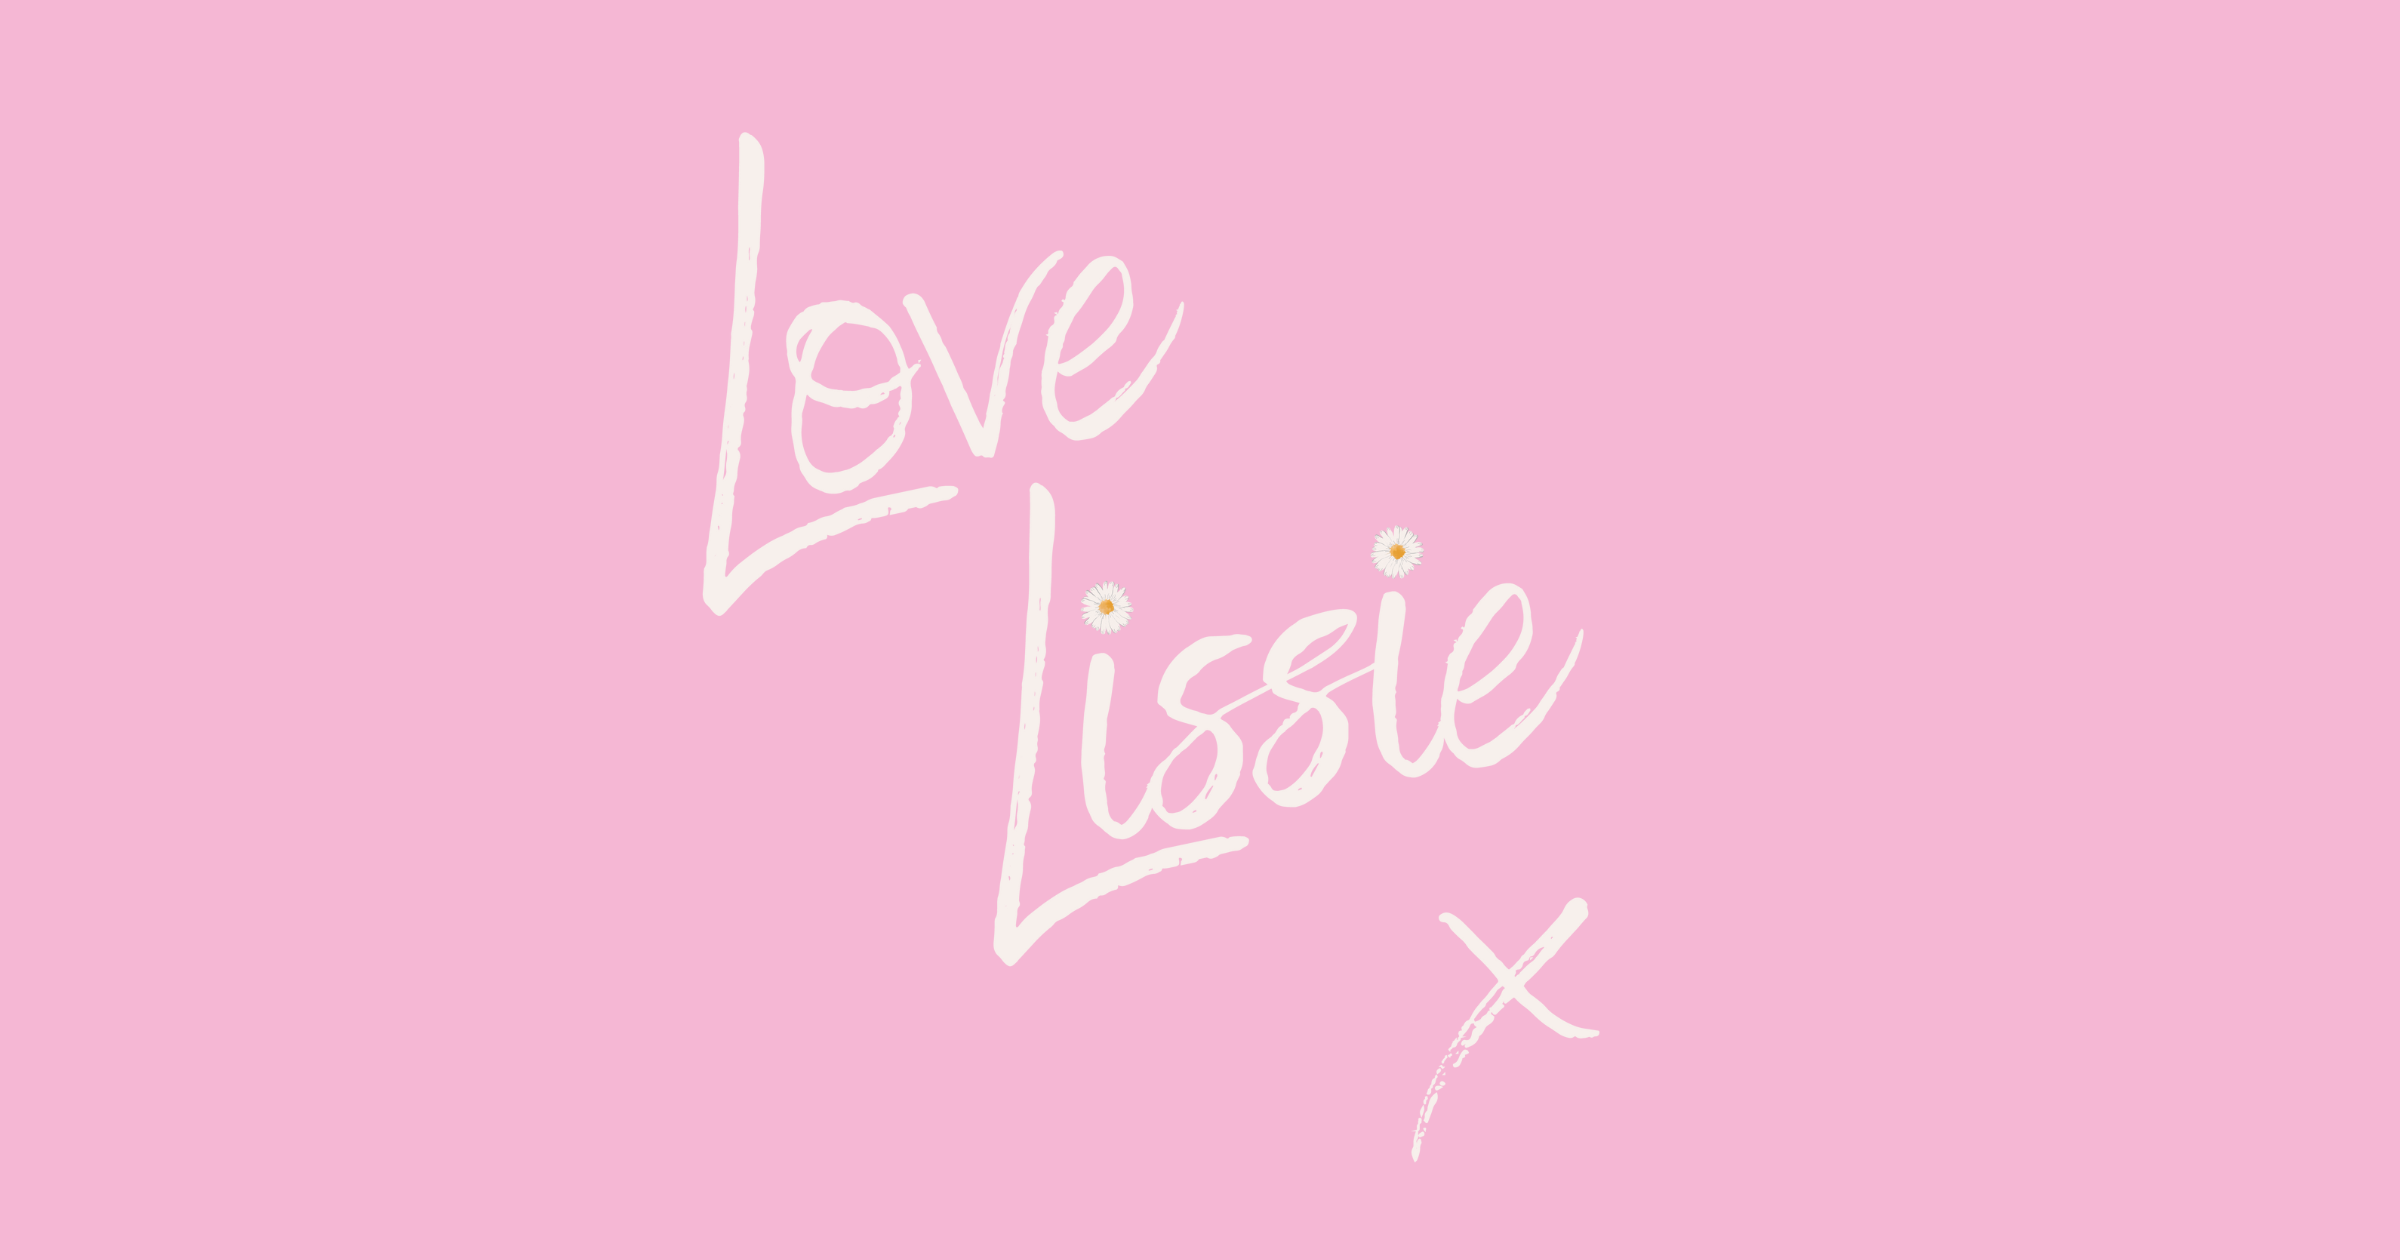 Leggings Love Stories – Love Lissie